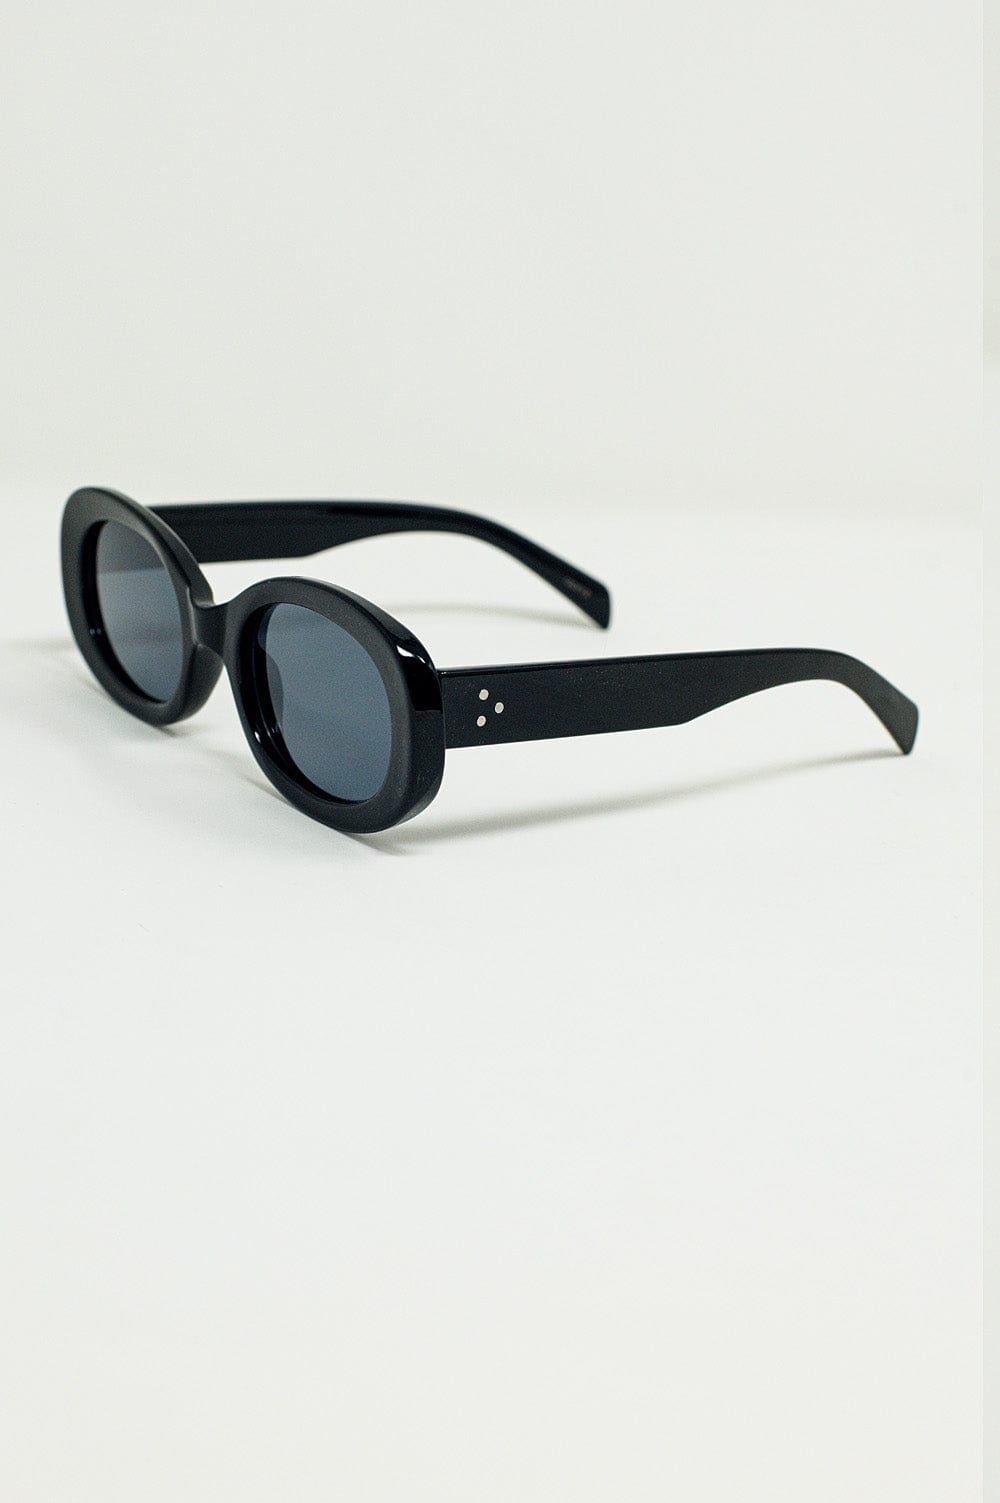 Q2 Women's Sunglasses One Size / Black Oversized Oval Sunglasses In Black